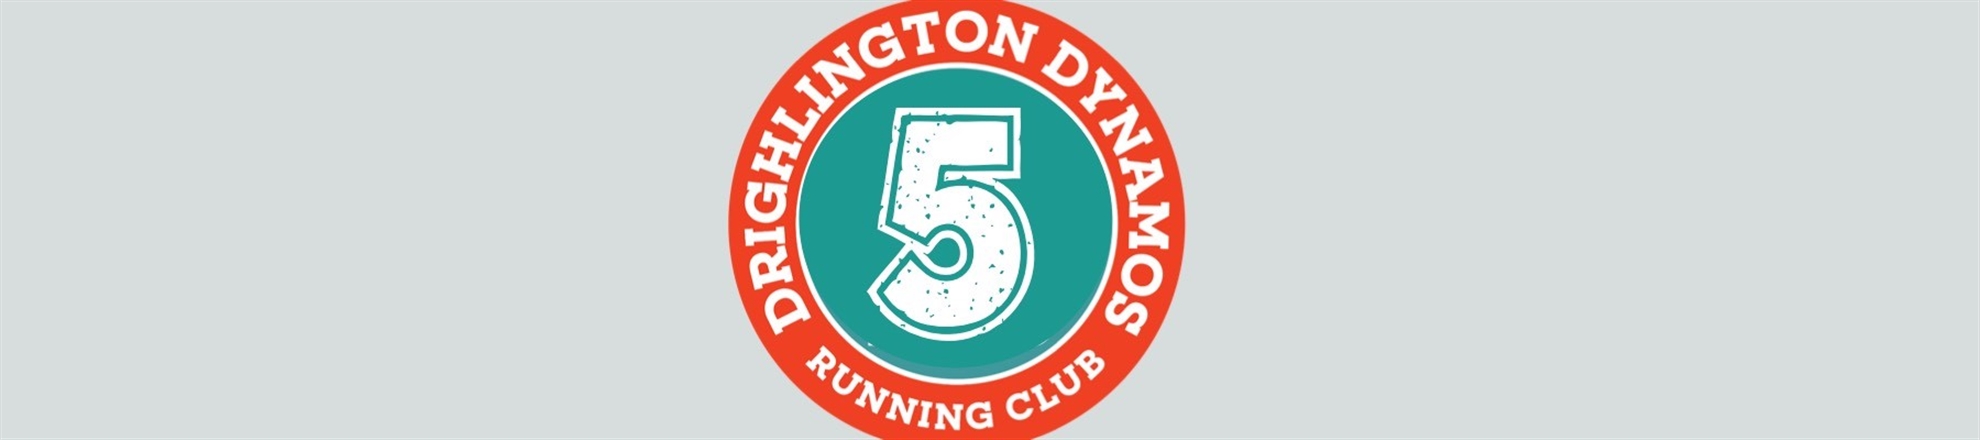 Drighlington Community Sports Club - Group 5